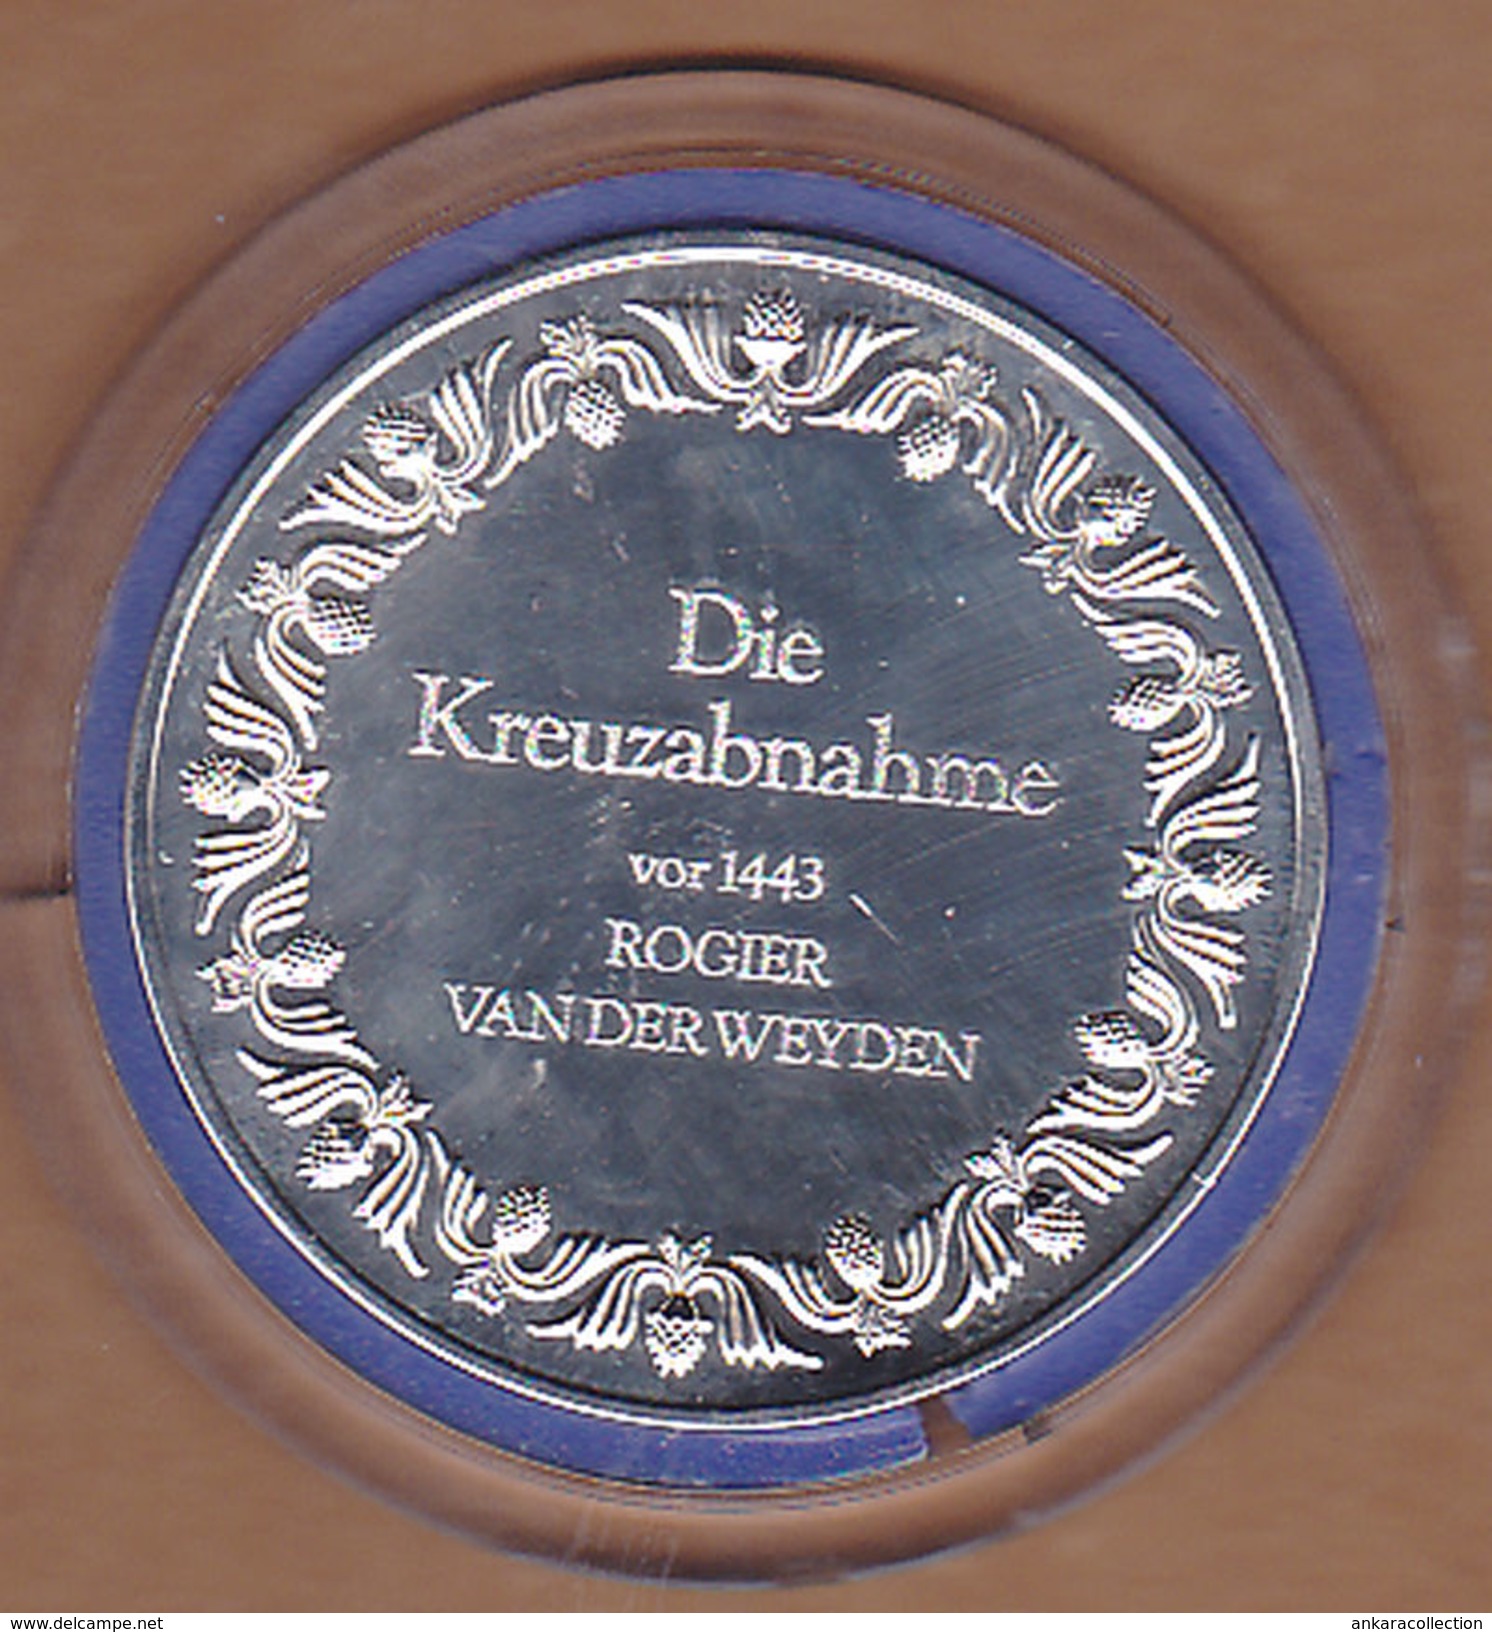 AC - GERMANY - DIE KREUZABNAHME VOR 1443 ROGIER VAN DER WEYDEN JESUS CHRIST 66.50 GRAMM 925 SILVER - Collections